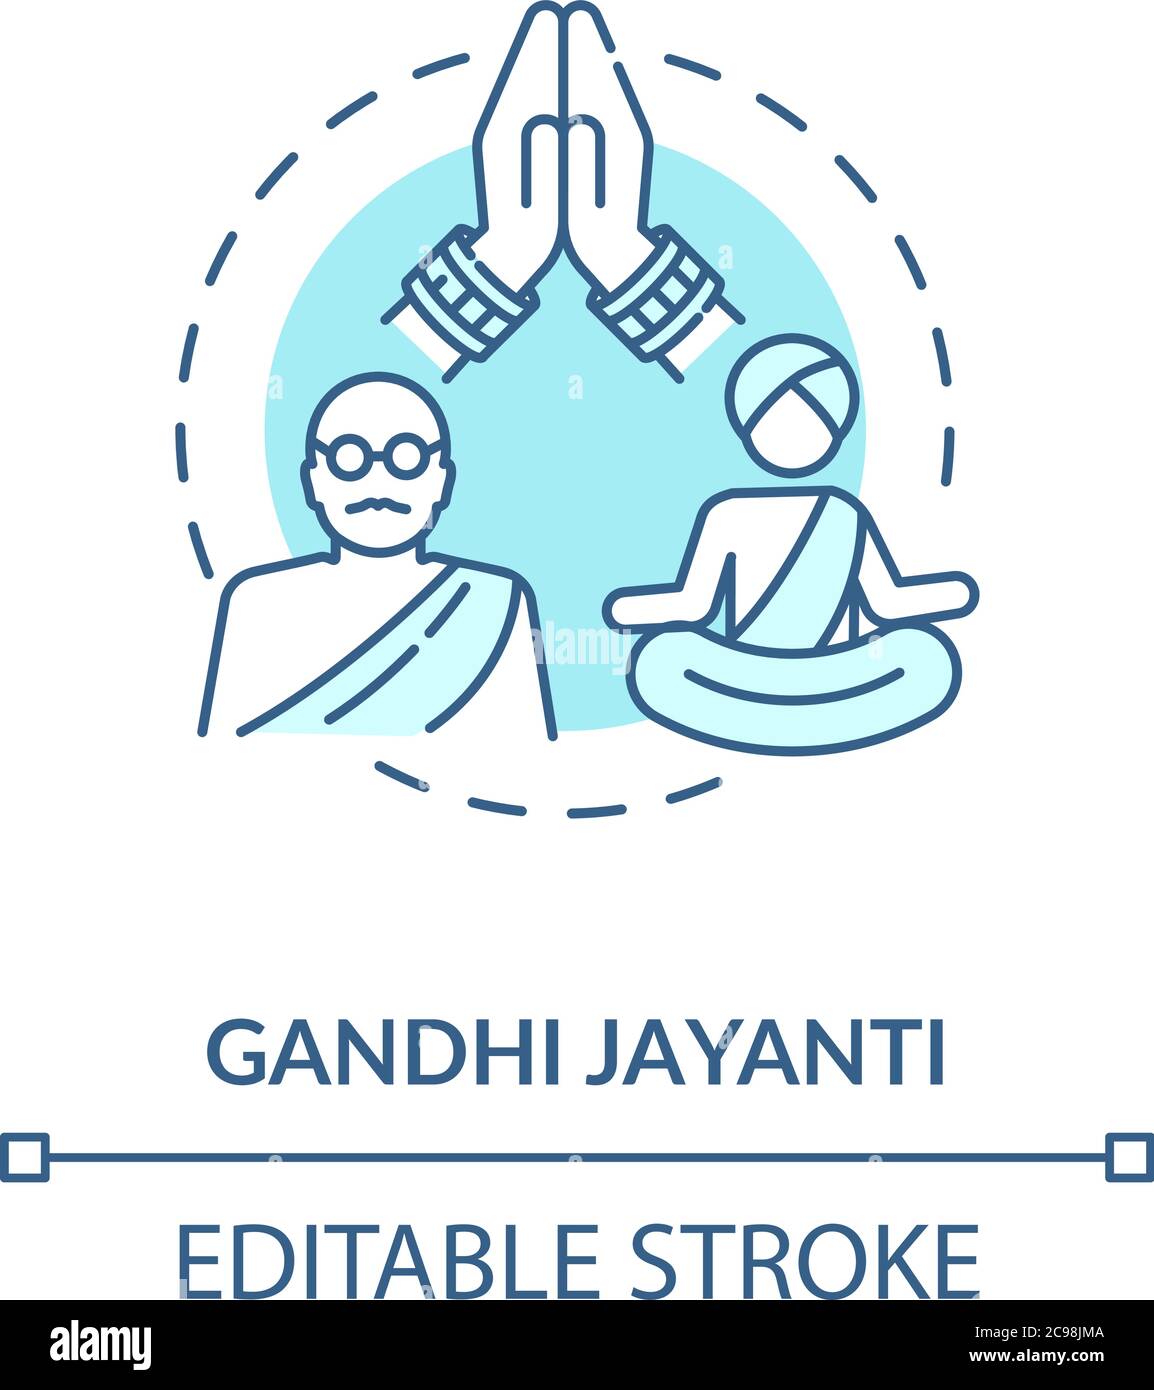 Gandhi jayanti concept icon. Indian holiday, Mahatma Gandhi commemoration idea thin line illustration. International non violence day. Vector isolated Stock Vector